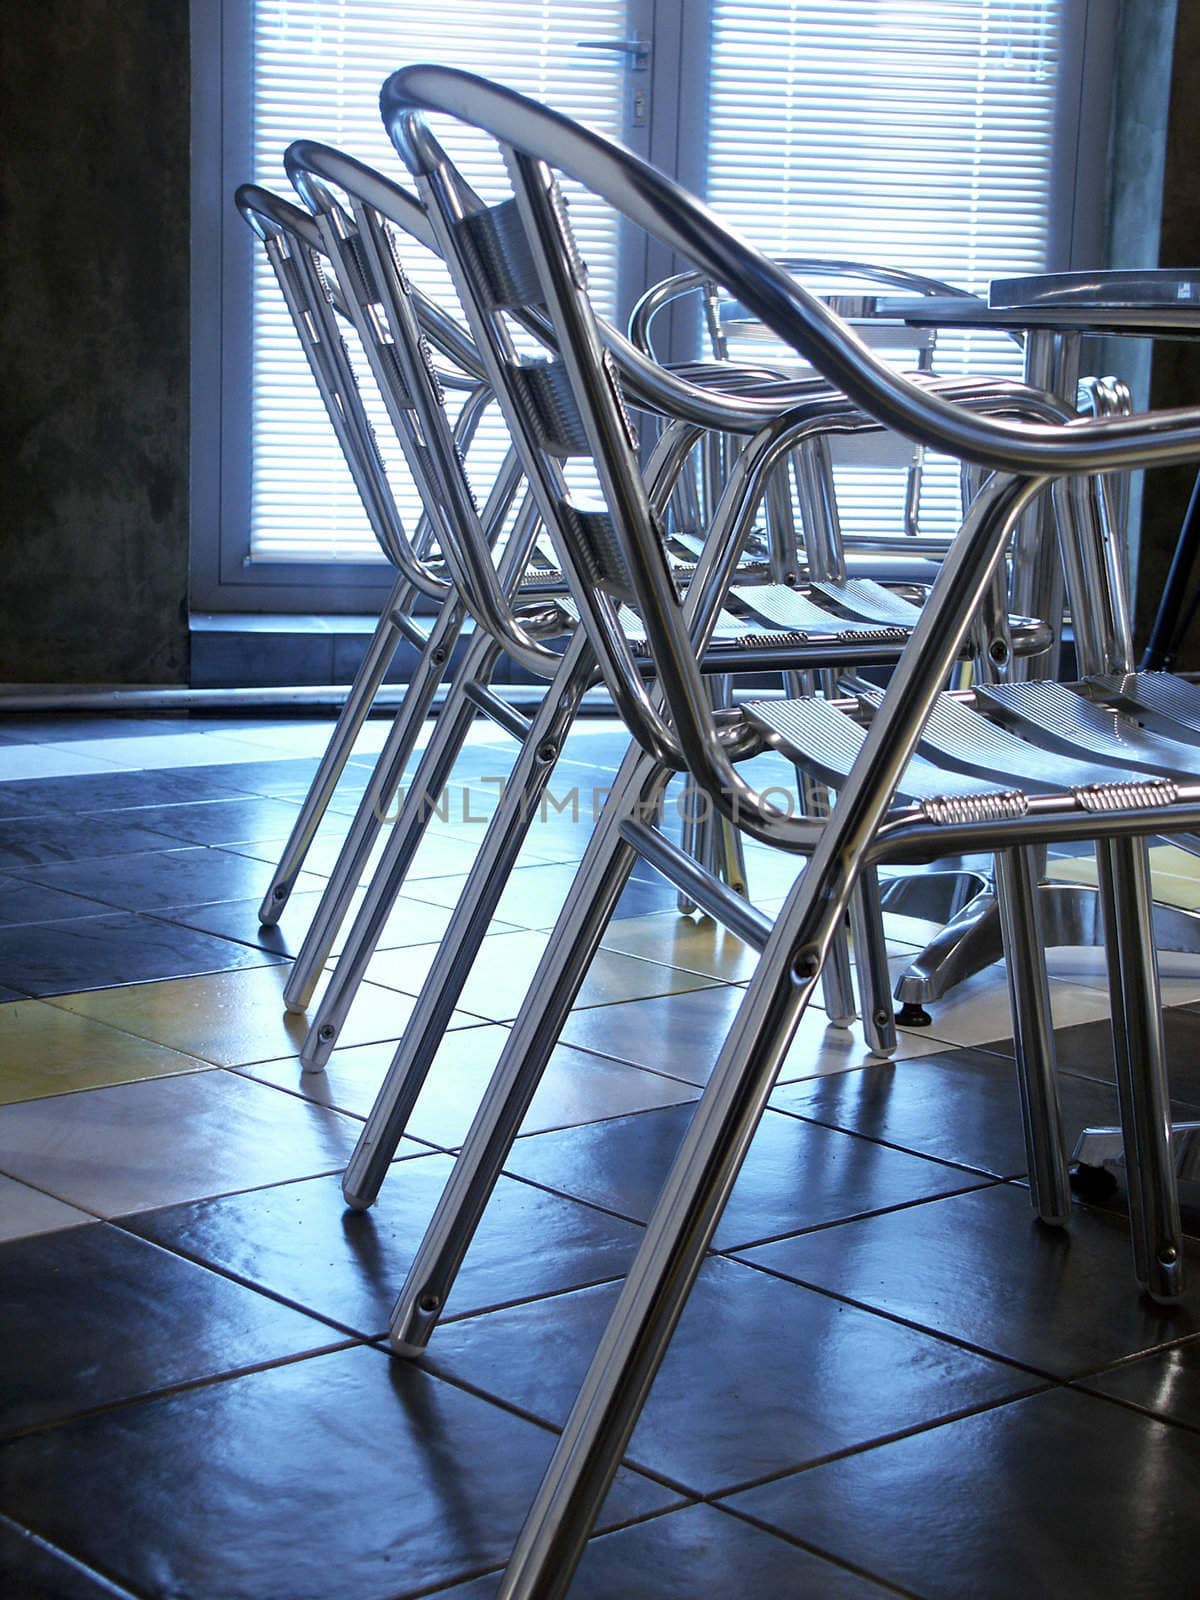 Steel chair in office